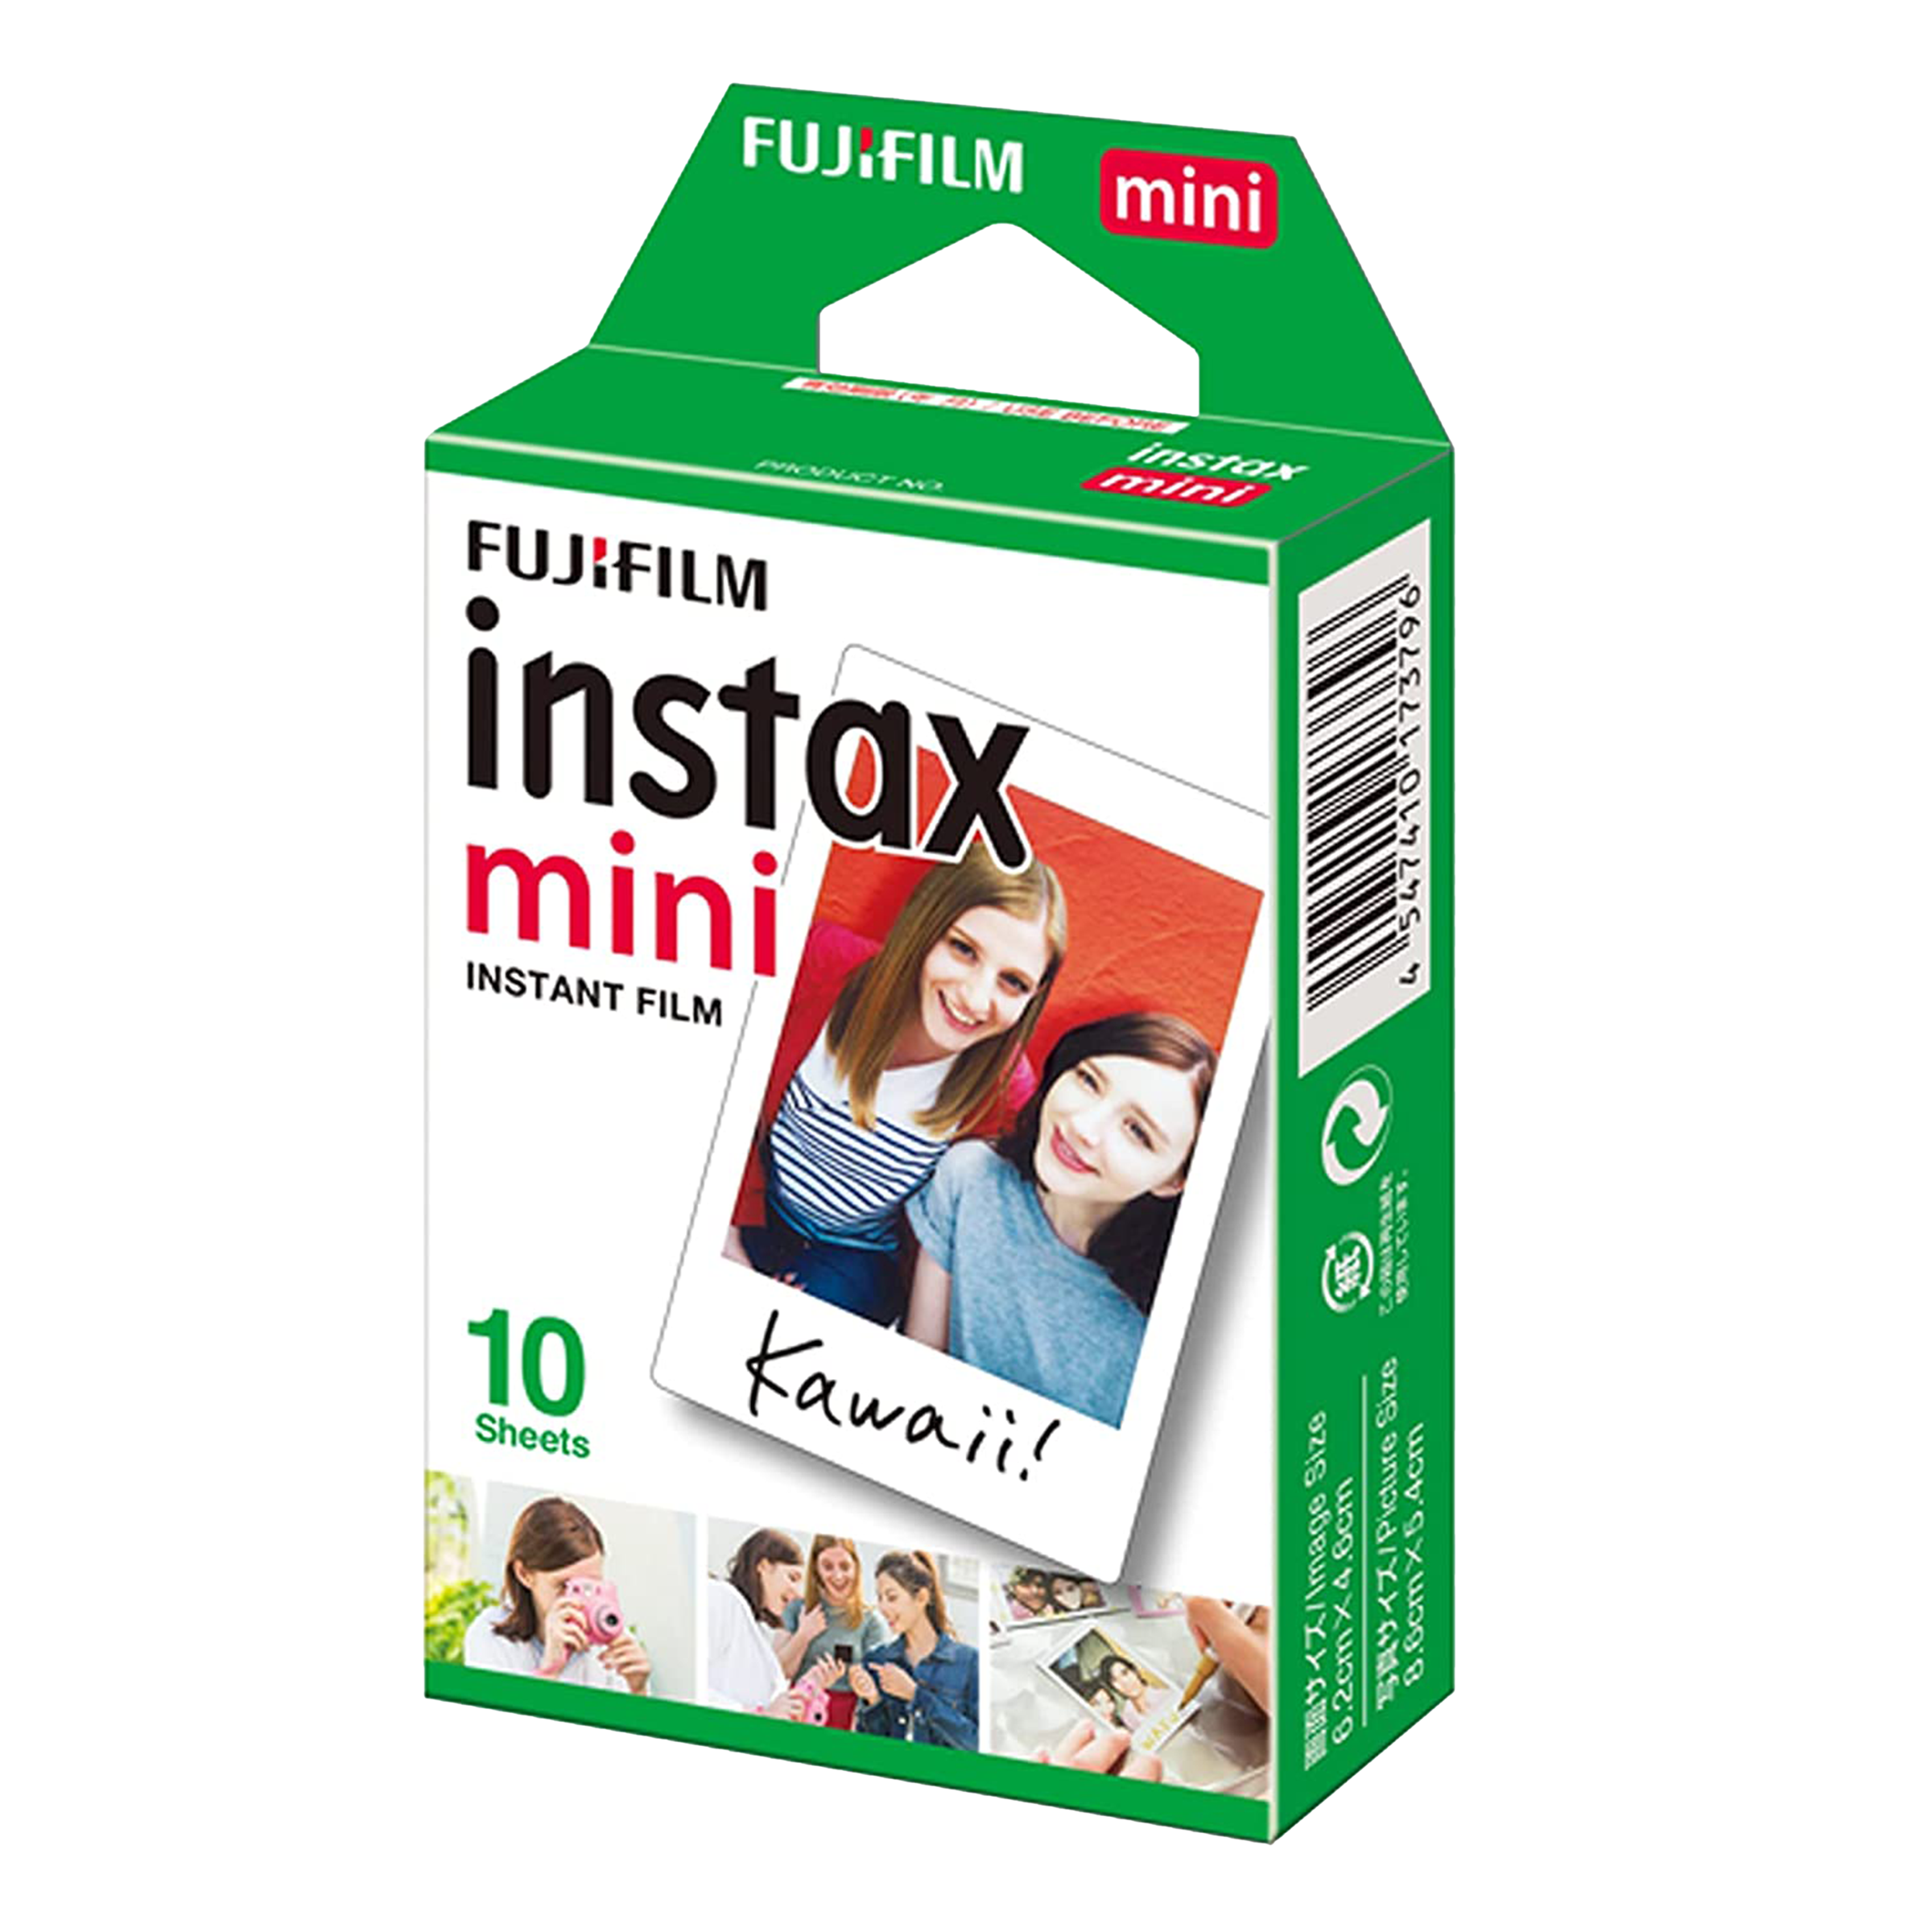 Fujifilm Instax Mini Pack of 10 Film Sheets (Glossy Finish, 16386004, White)_1